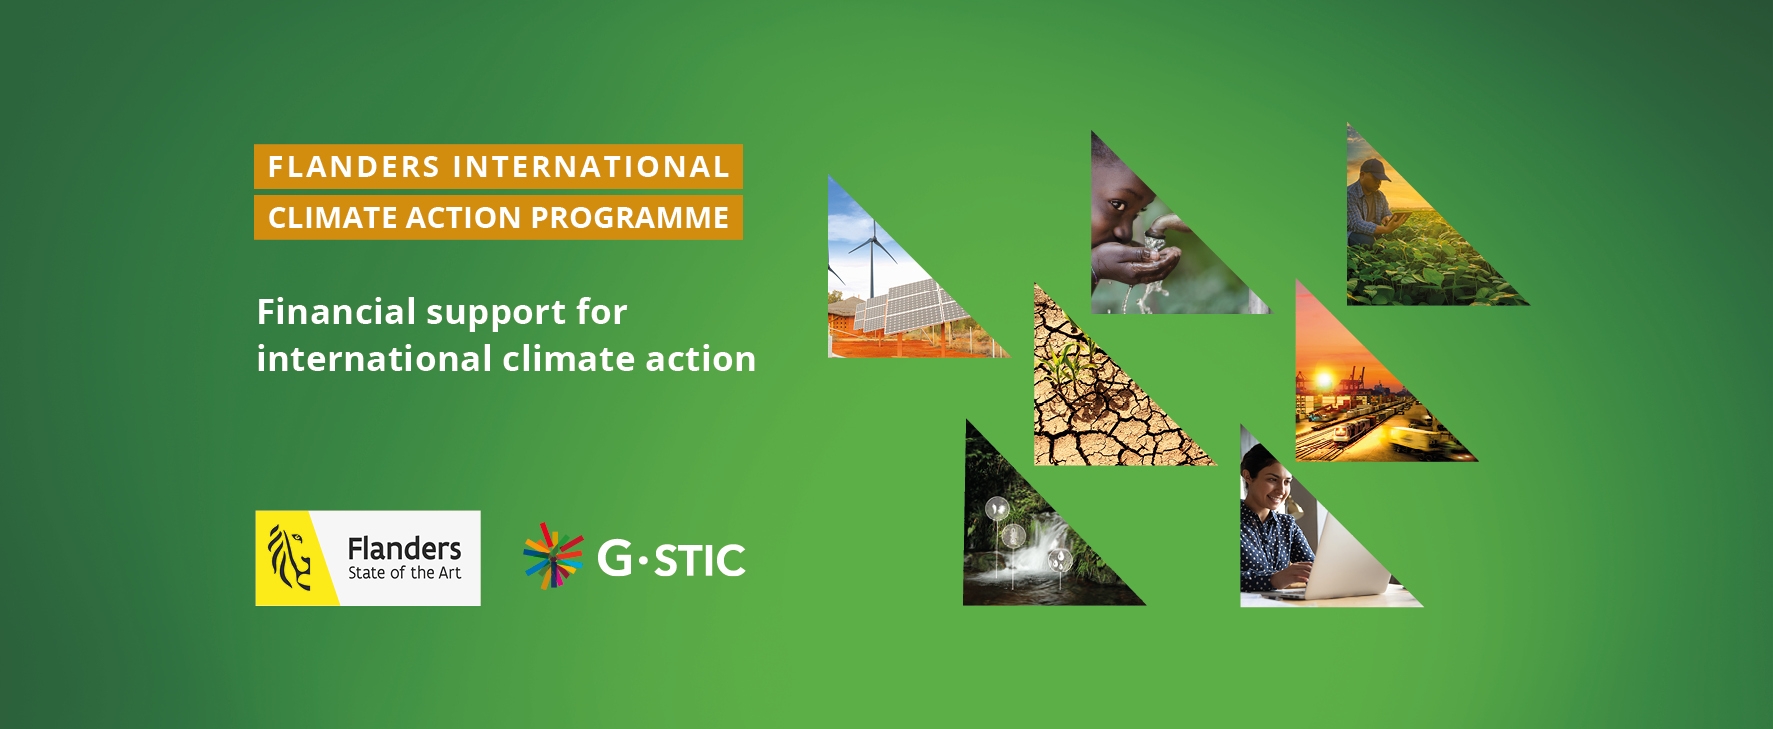 Flanders international climate action programme